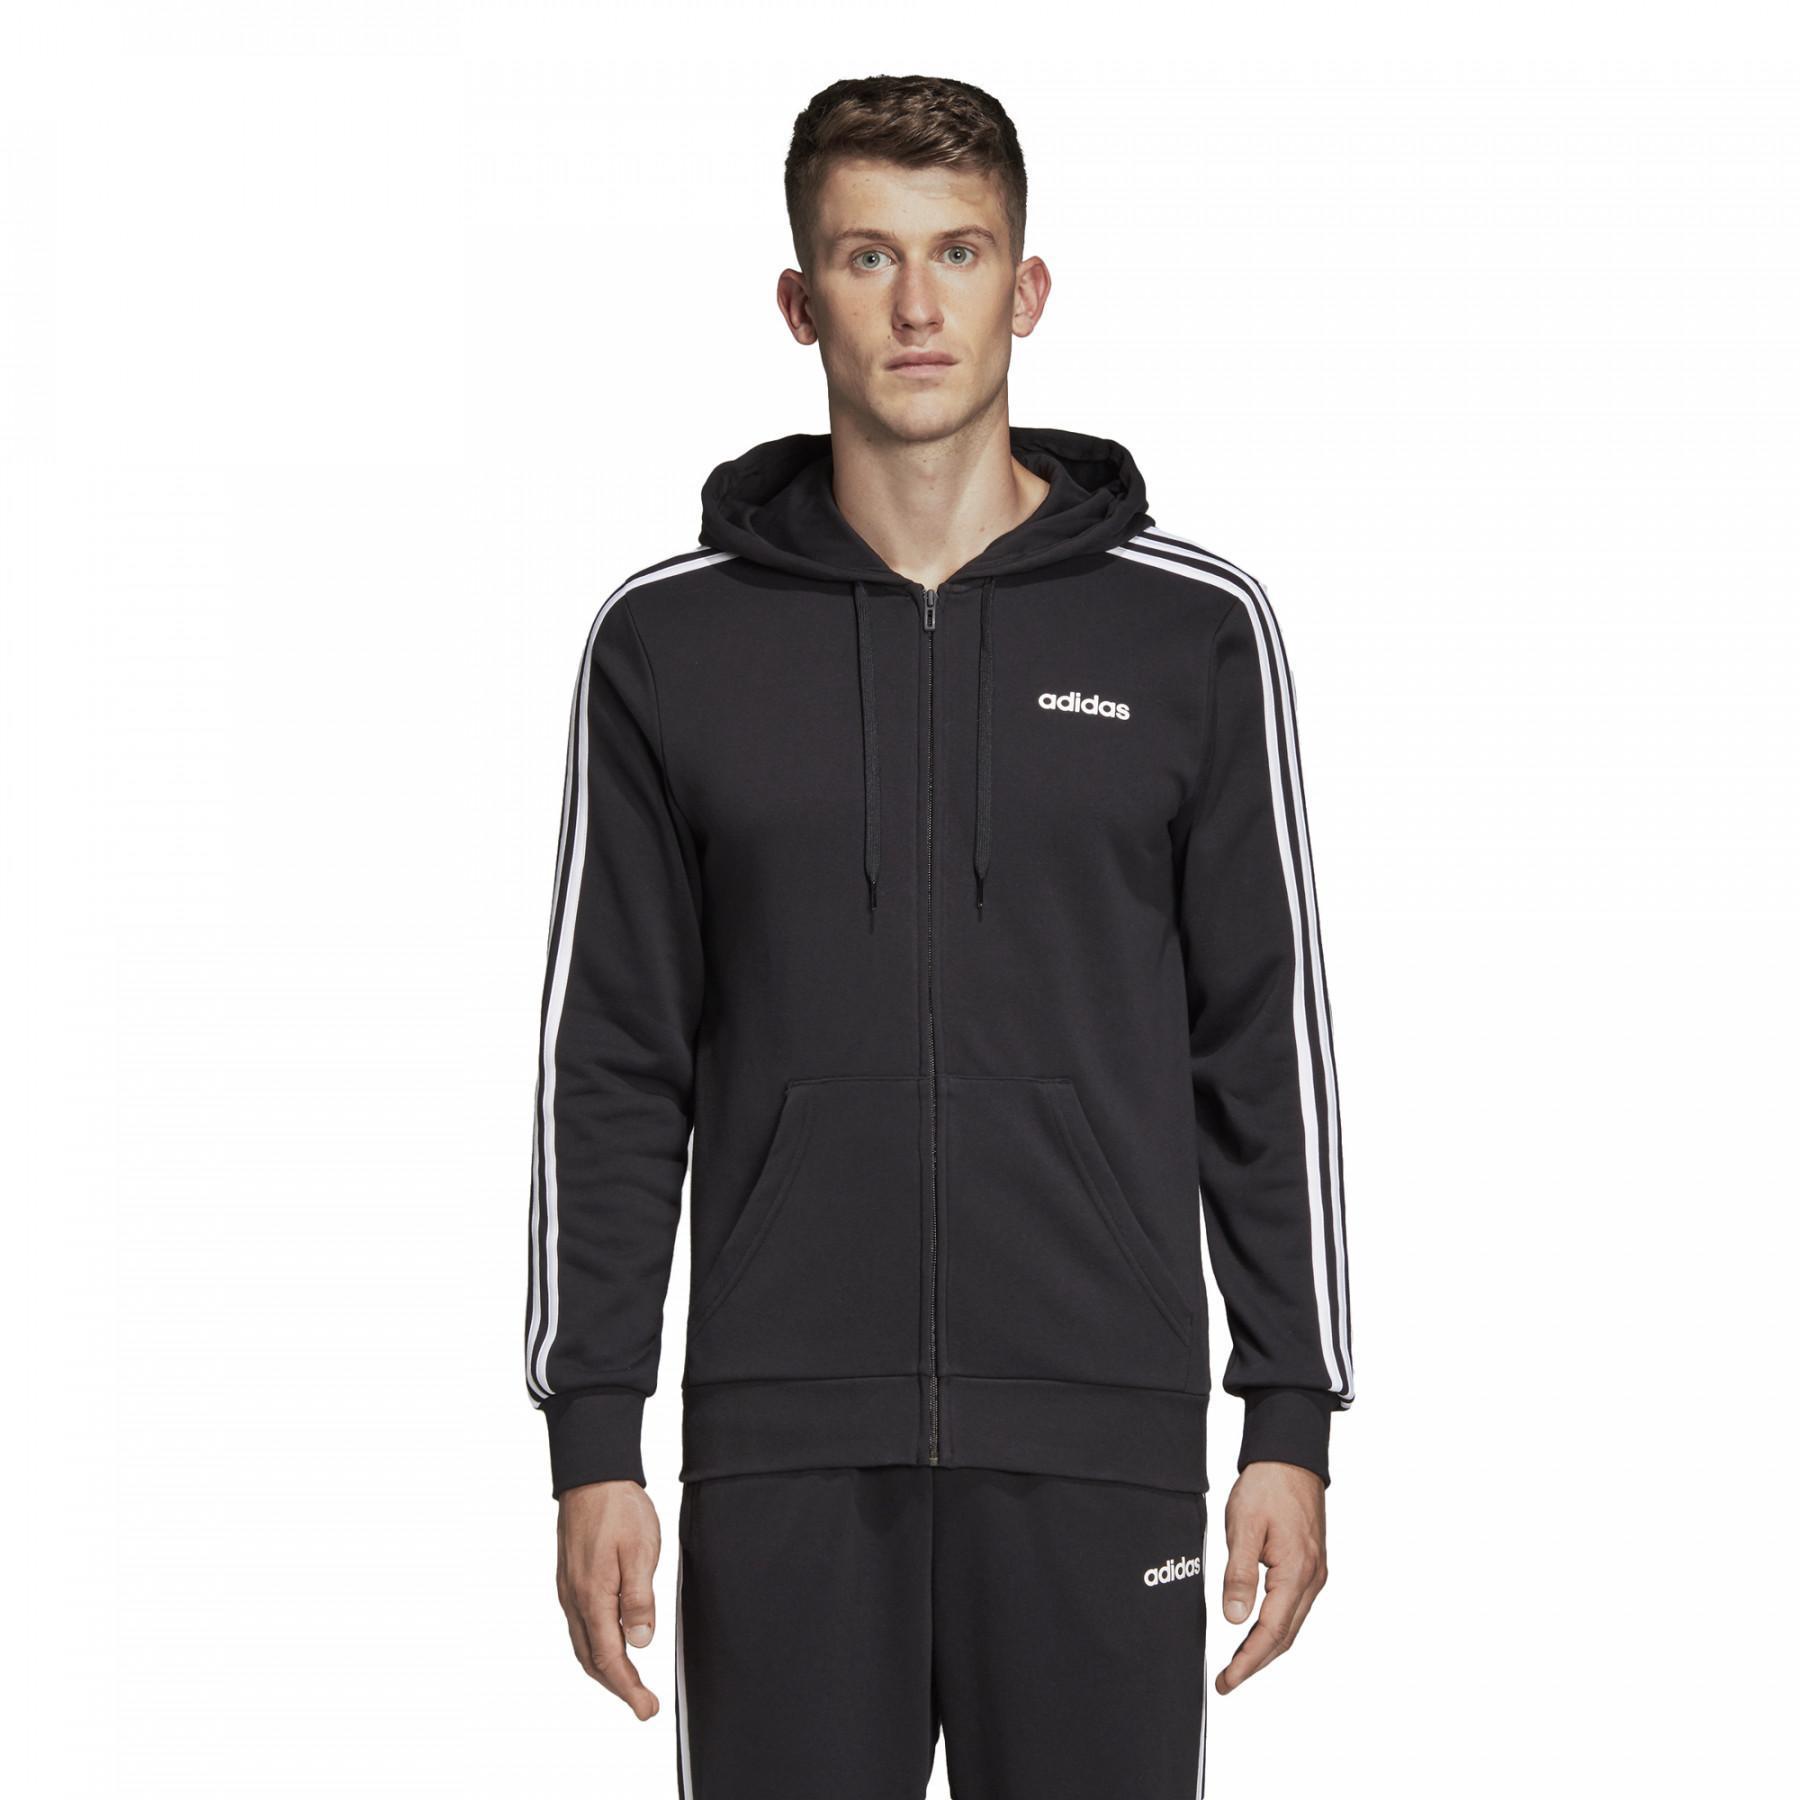 Sweat jacket adidas Essentials 3-Stripes - adidas - Brands - Handball wear